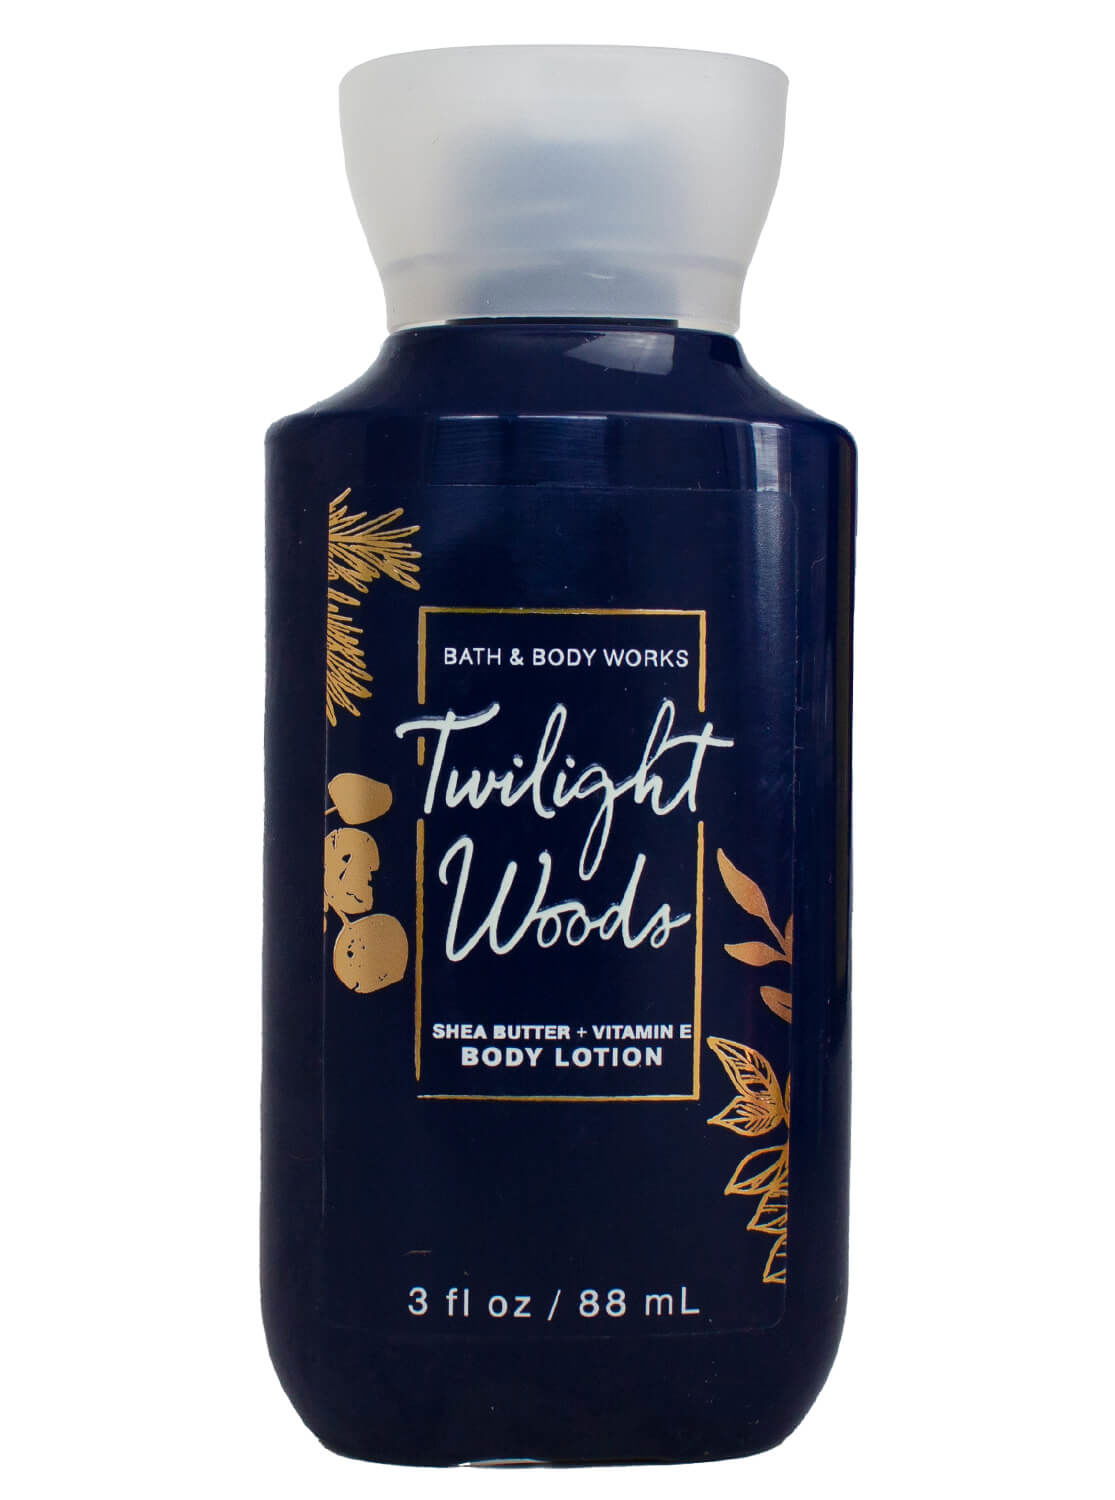 Body Lotion - Twilight Woods (Travel Size) - 88ml